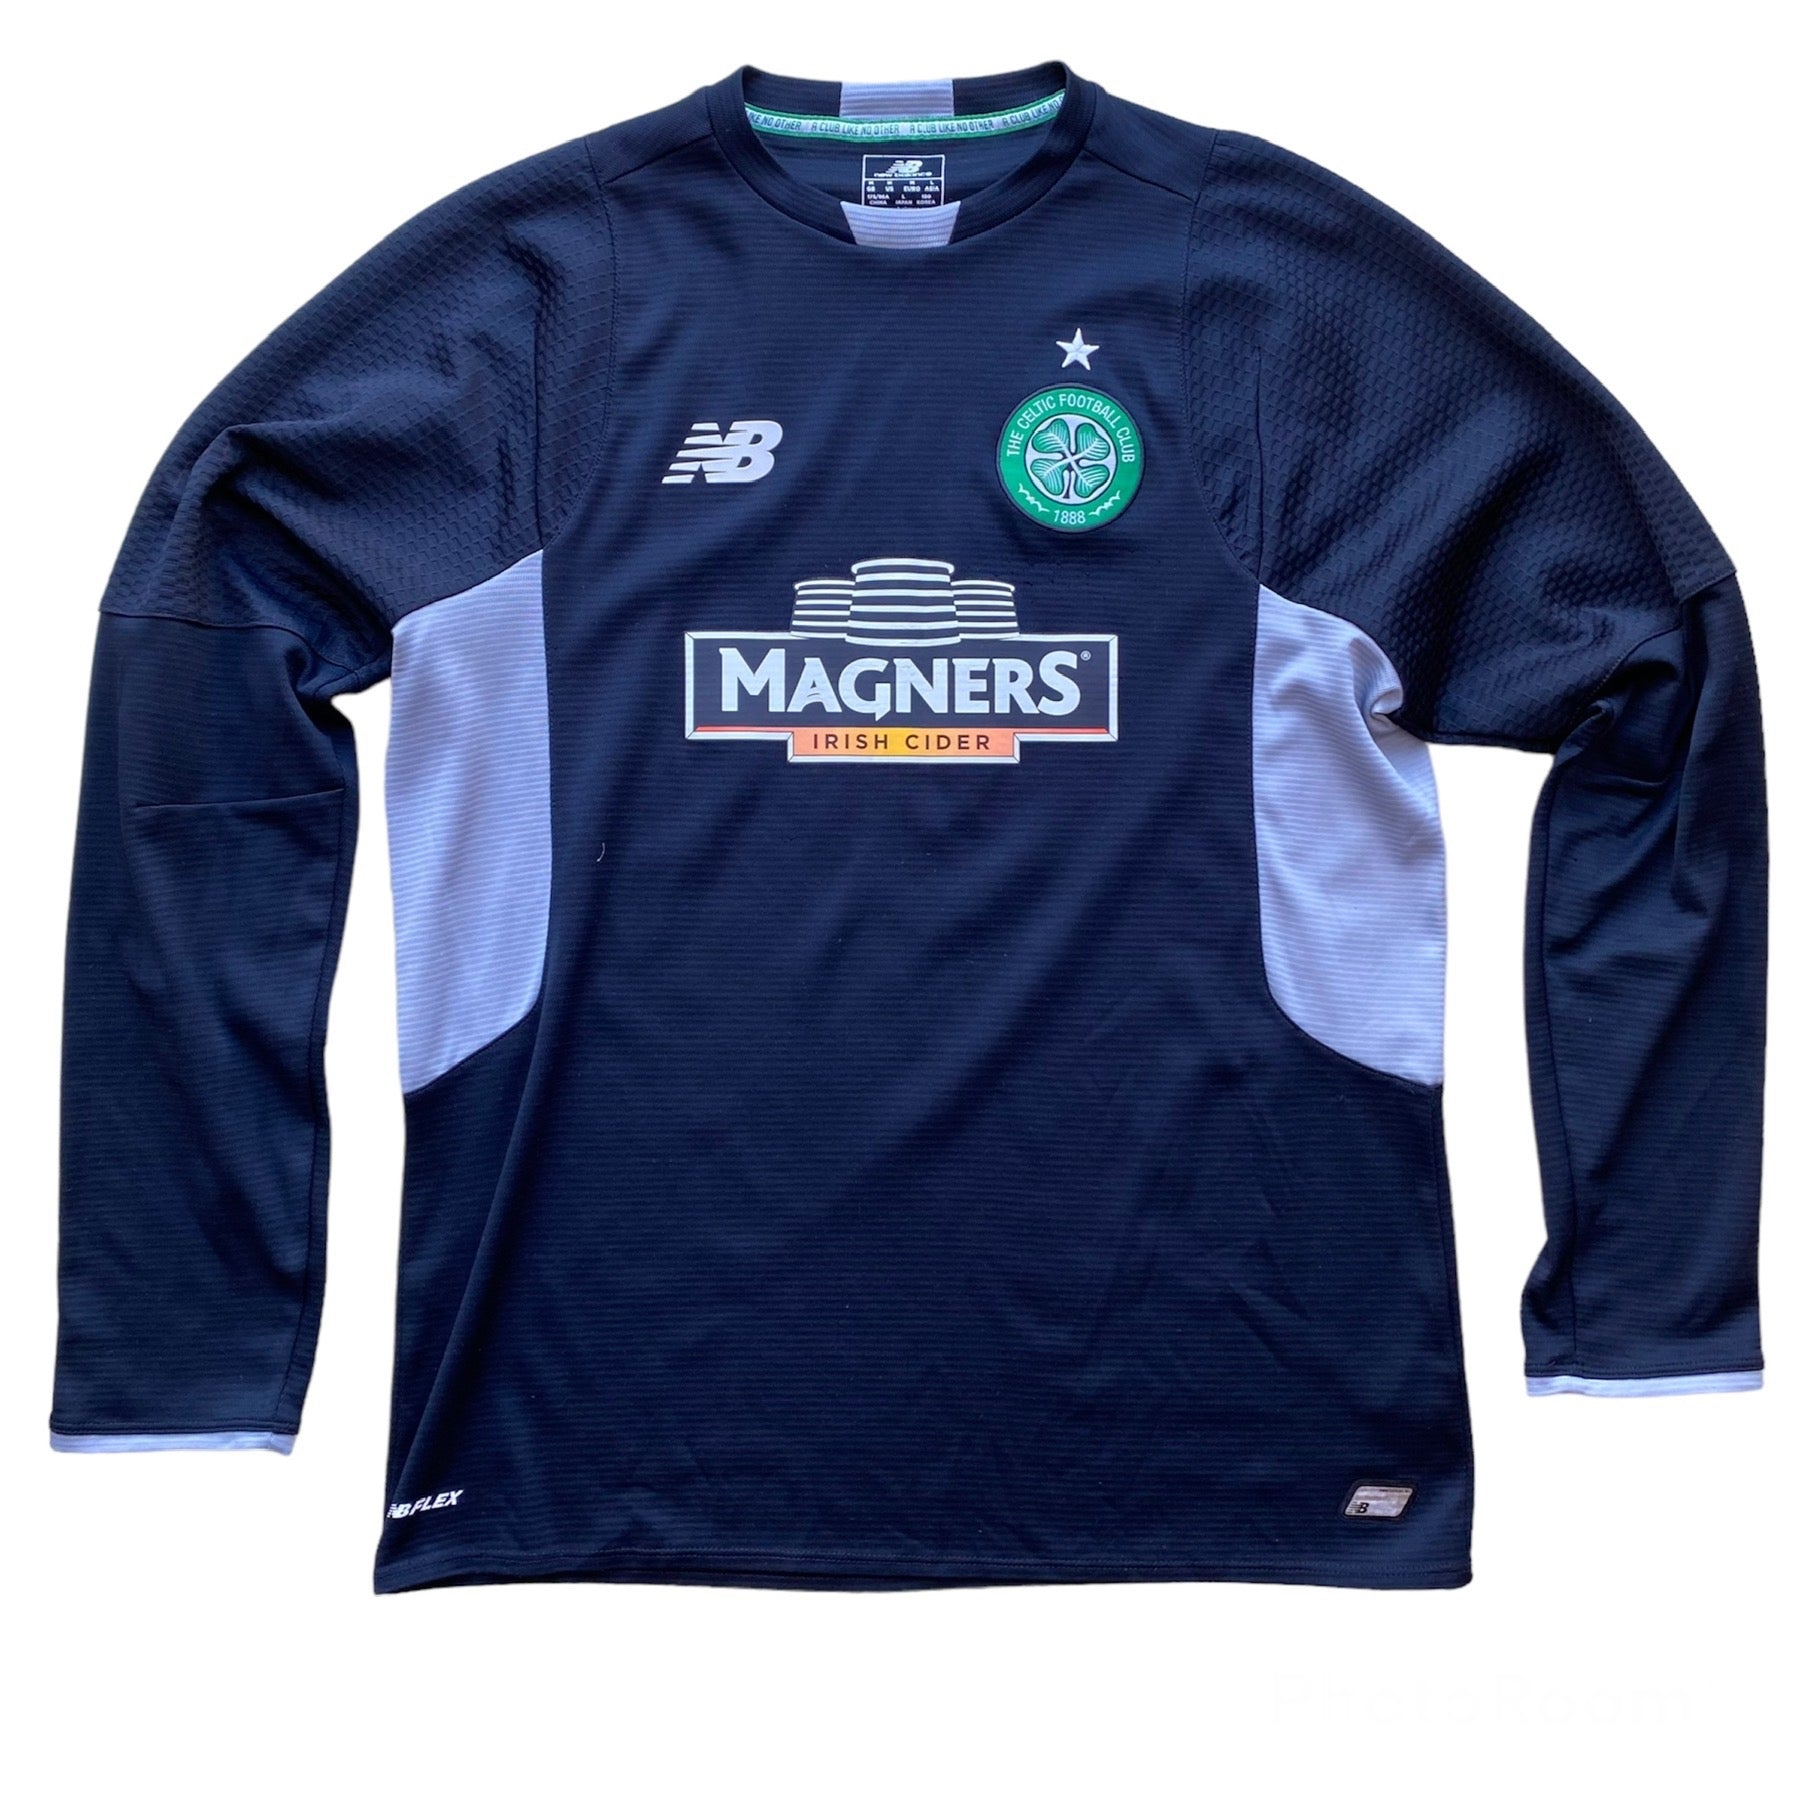 New Celtic Third Kit 15/16- Celtic European Top 2015-16 New Balance